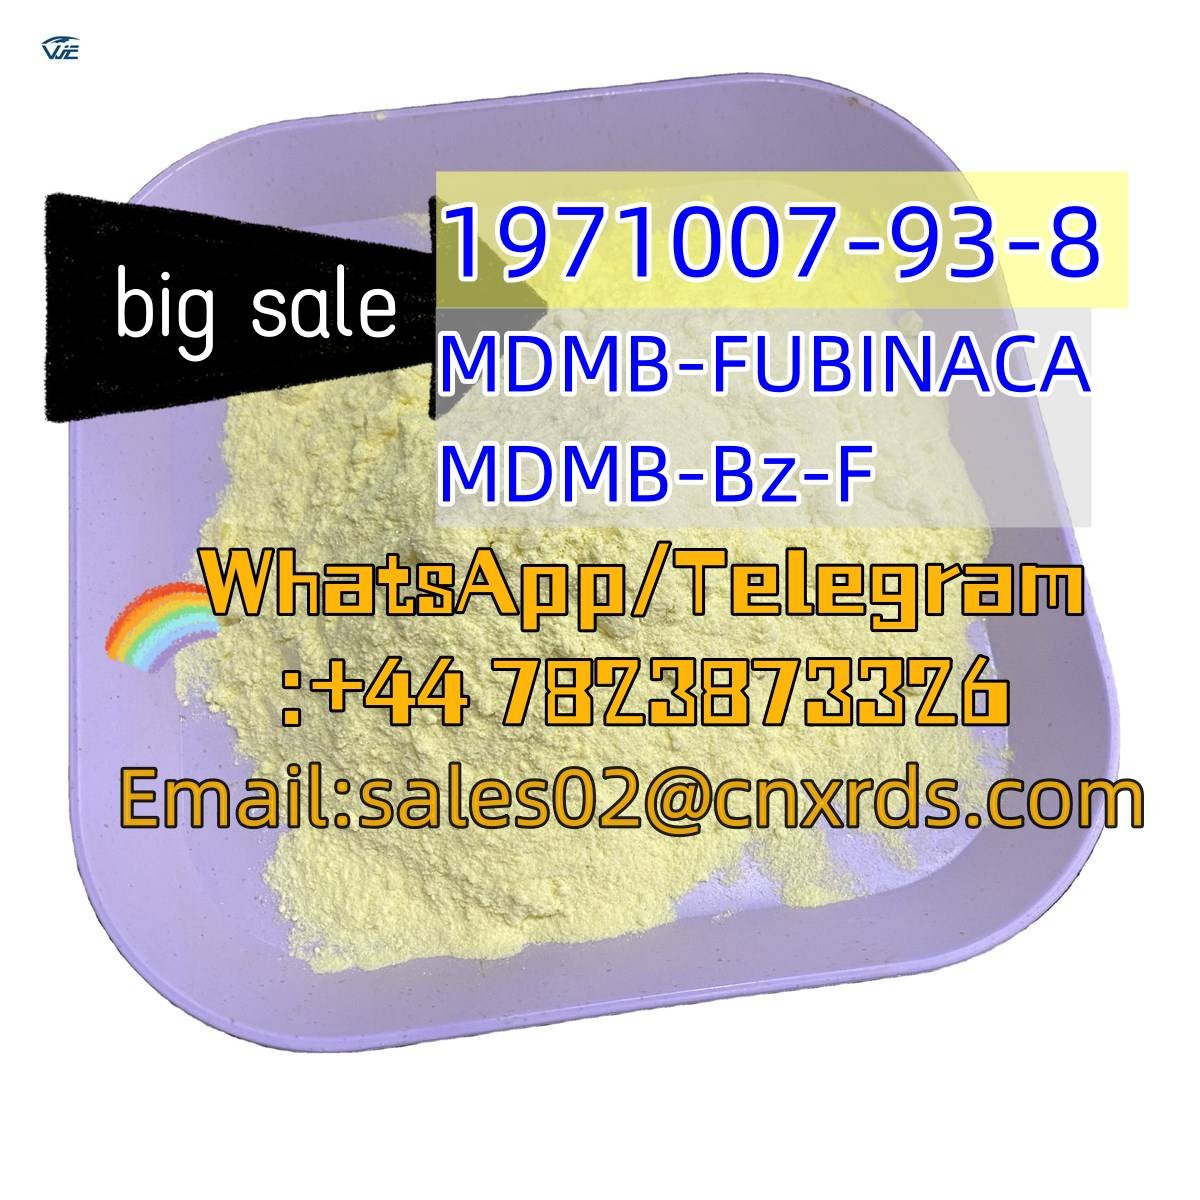 Research Chemical Globally Wholesales  1971007-93-8 MDMB-FUBINACA  MDMB-Bz-F